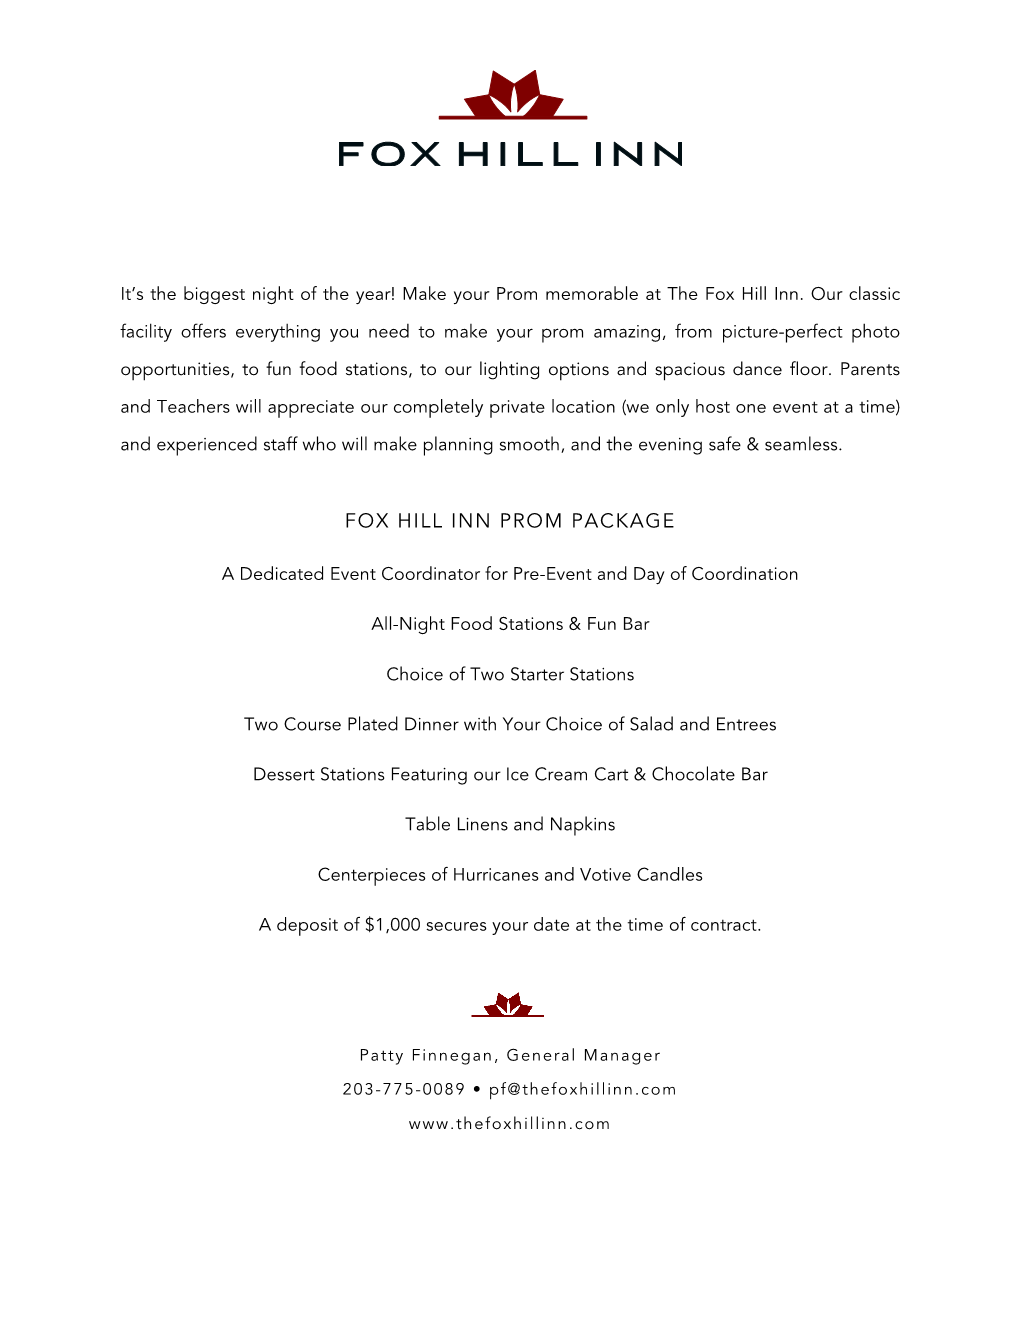 Fox Hill Inn Prom Package